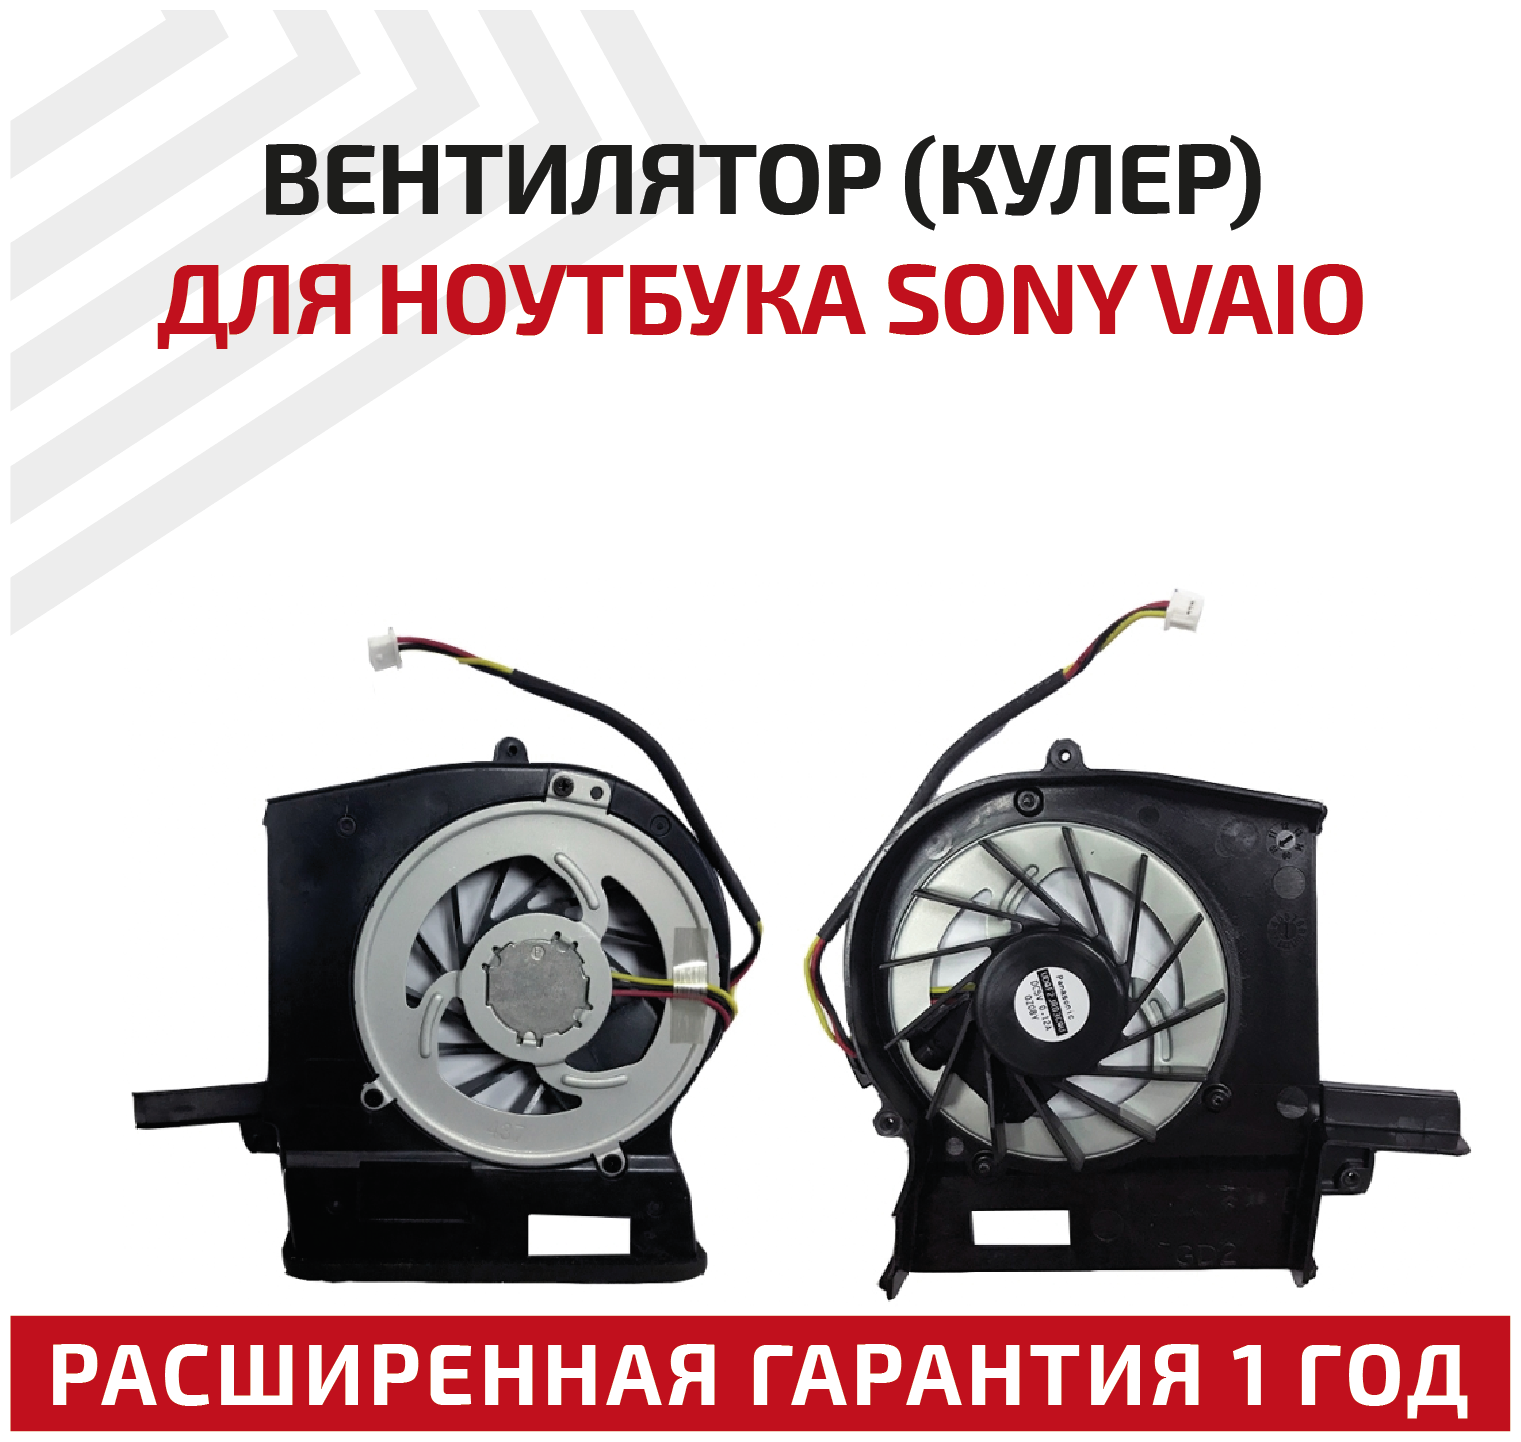 Вентилятор (кулер) для ноутбука Sony Vaio VGN-CS (Panasonic) VGN-CS108 VGN-CS108E VGN-CS109 VGN-CS109E VGN-CS110 3-pin